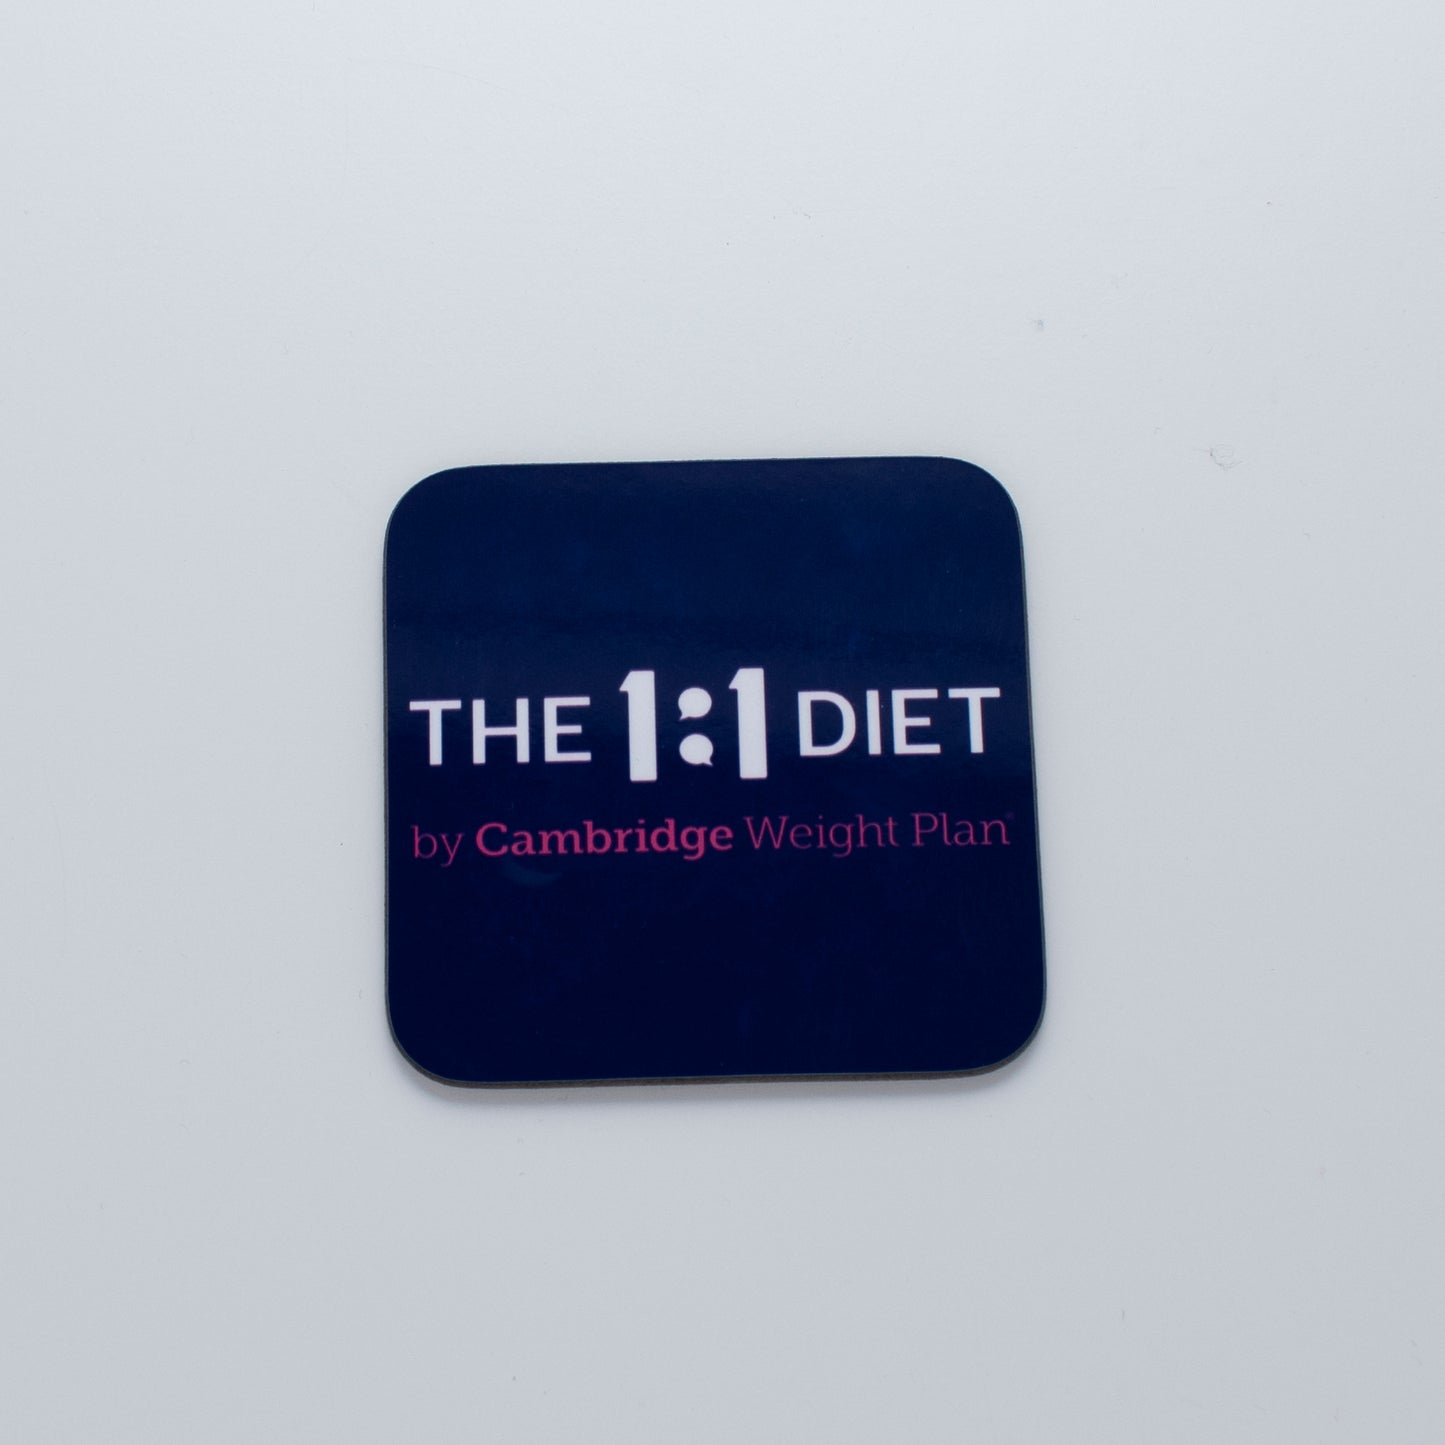 The 1:1 Diet - Coaster